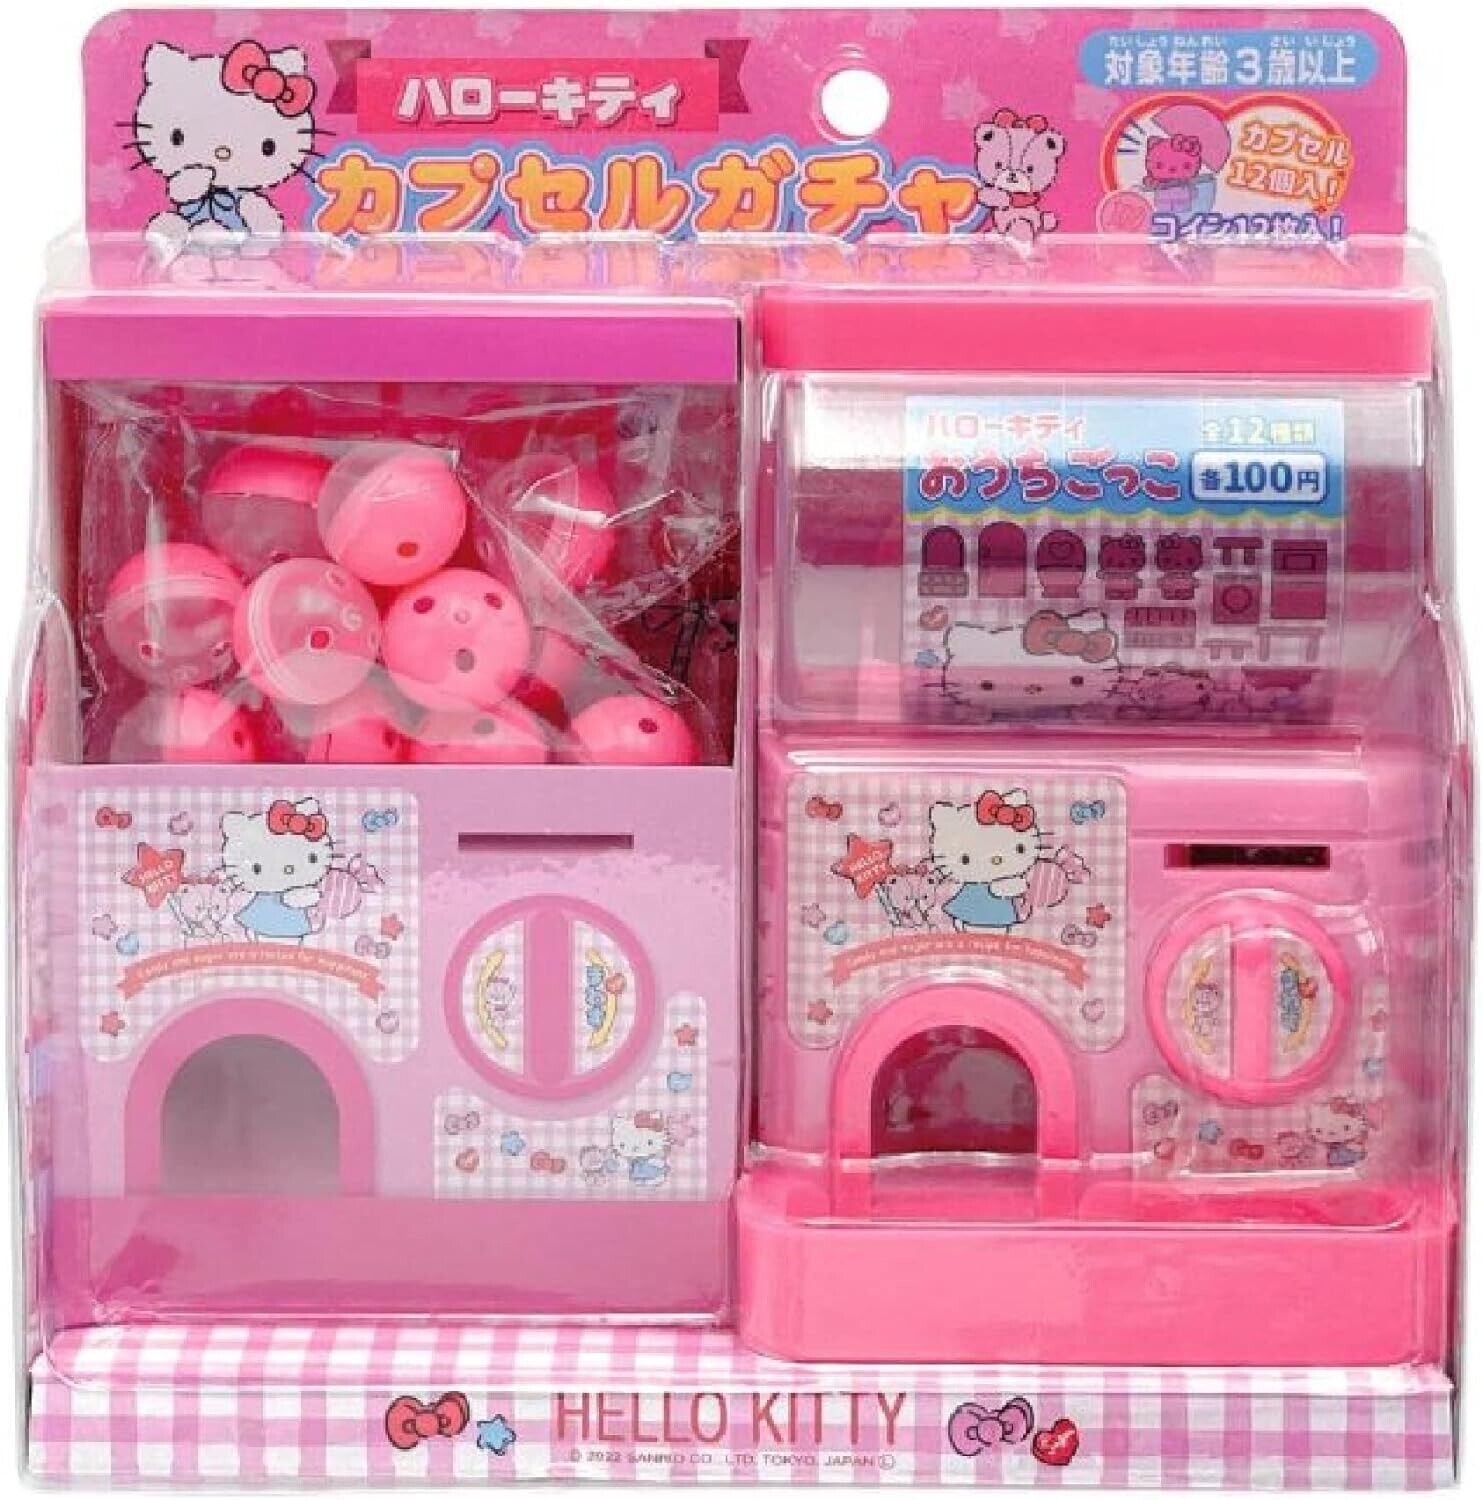 Hello Kitty Capsule Gacha Sanrio Kitty Gachapon Machine Set New From Japan